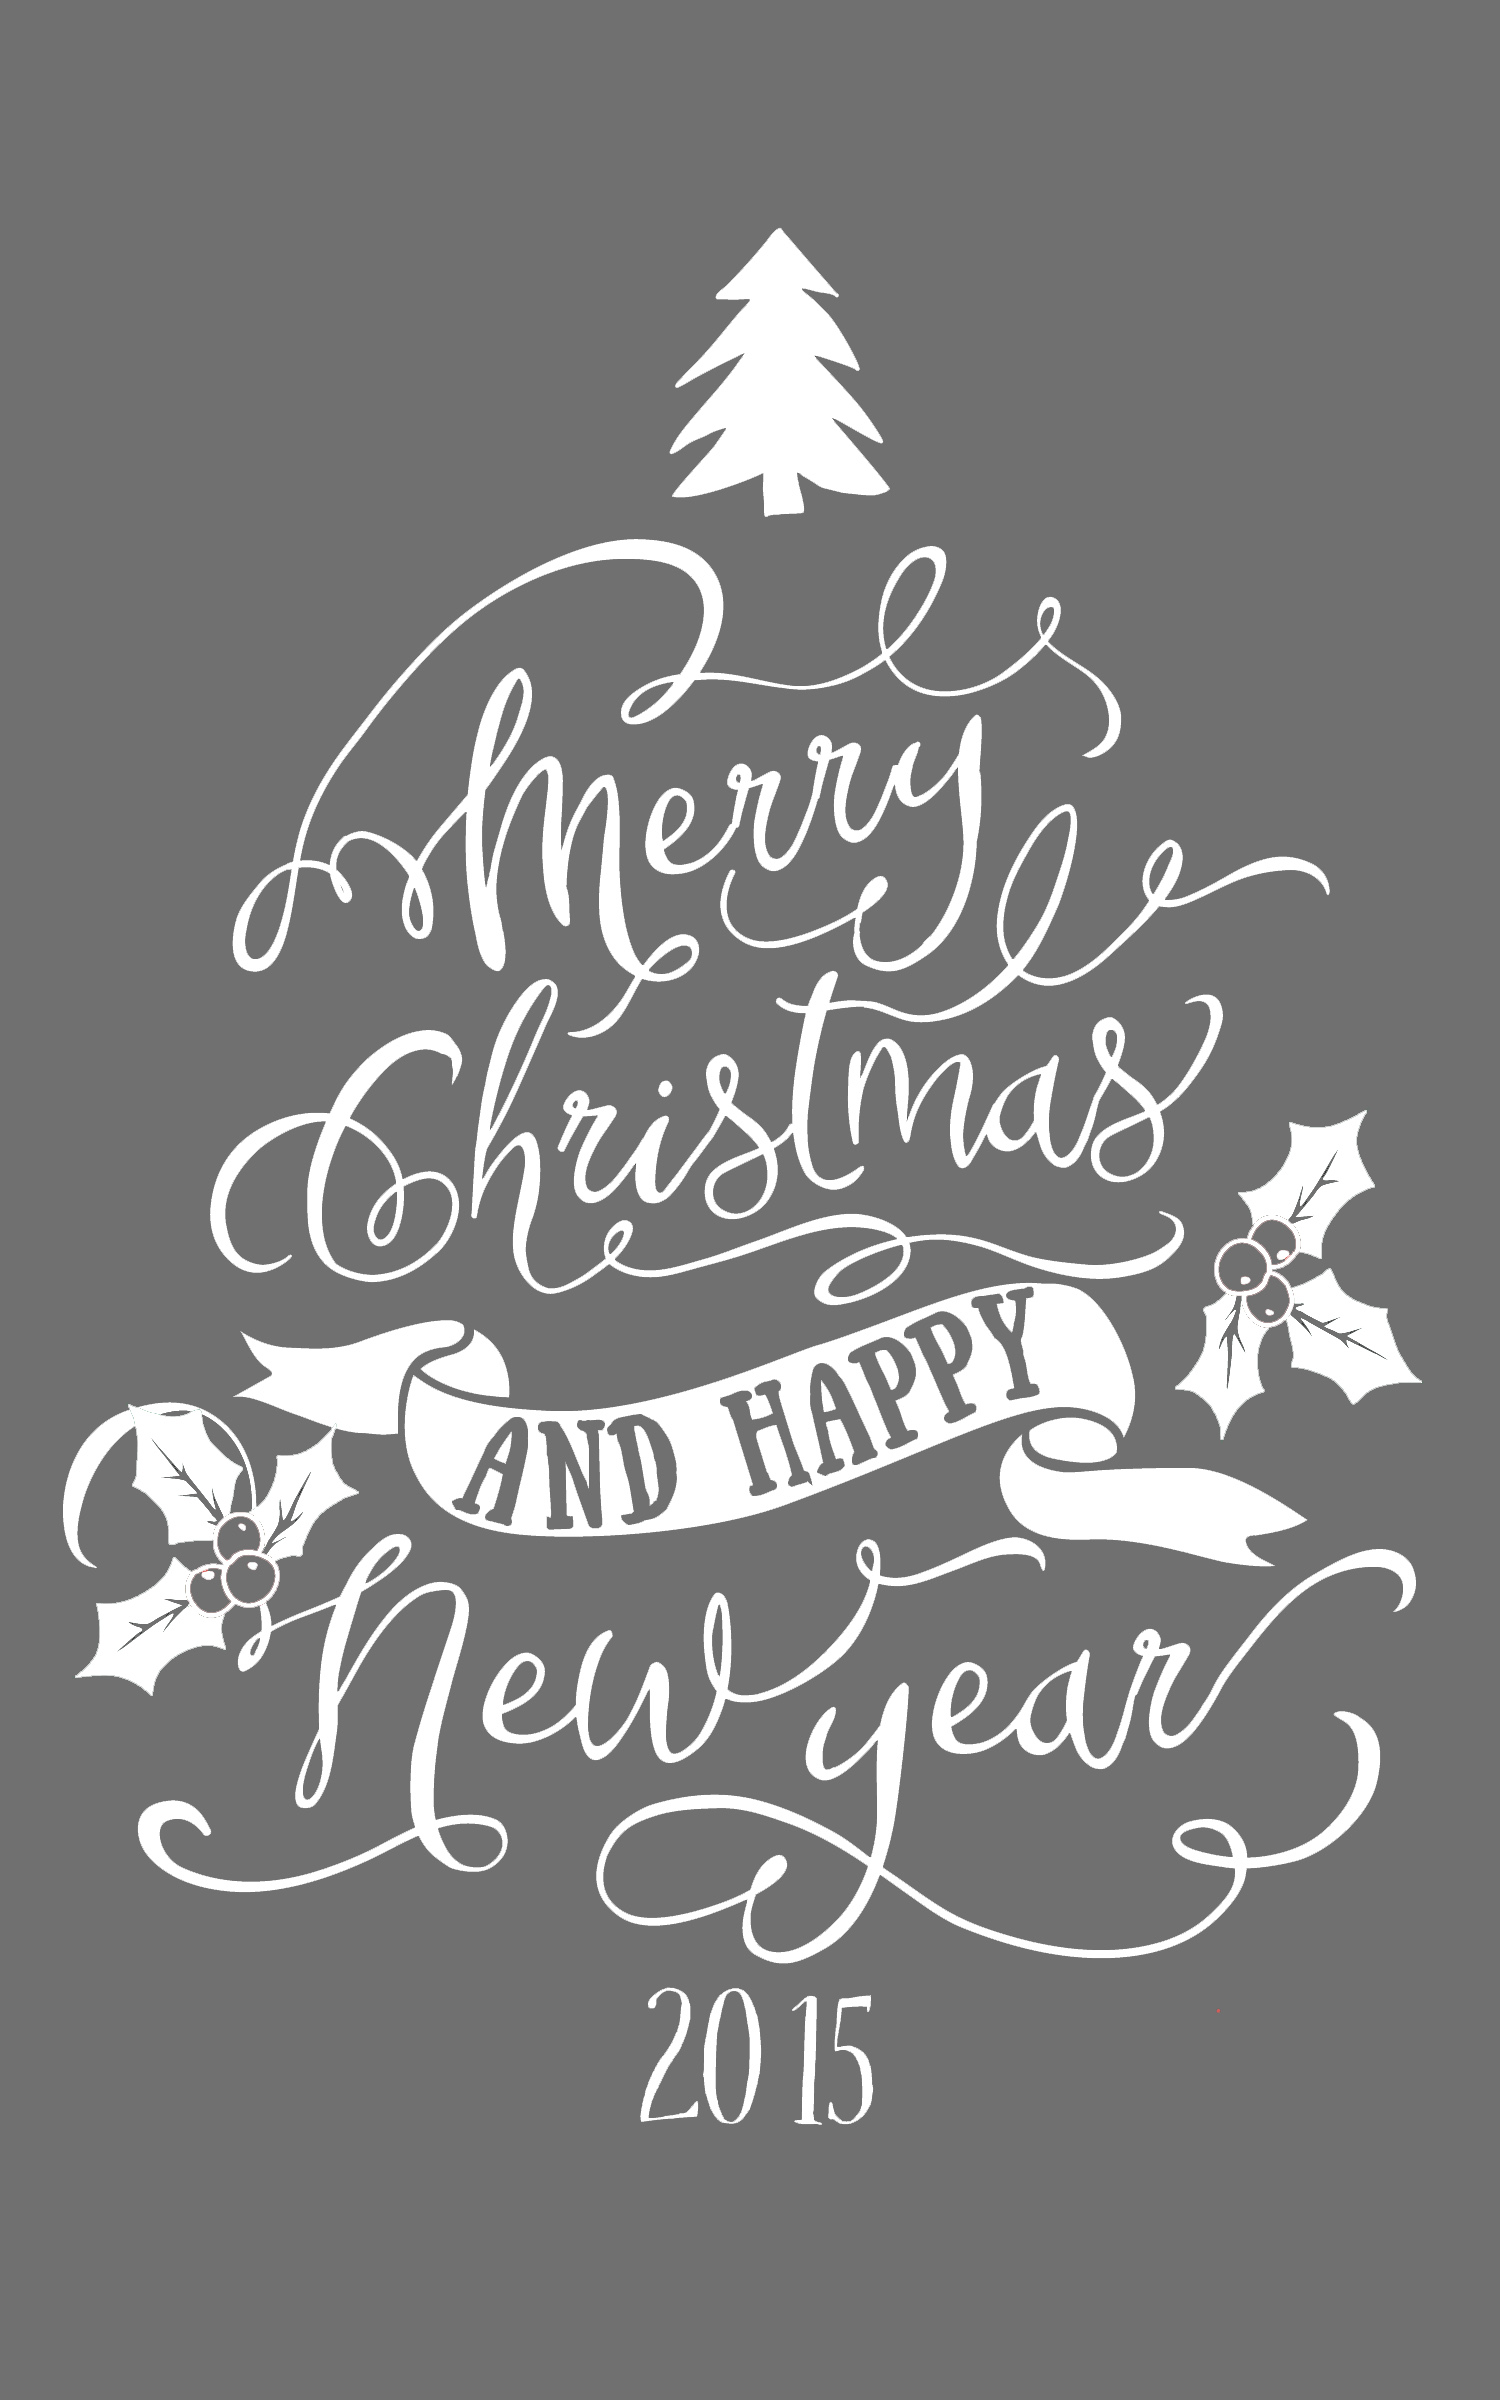 Merry Christmas & Happy New Year 2015